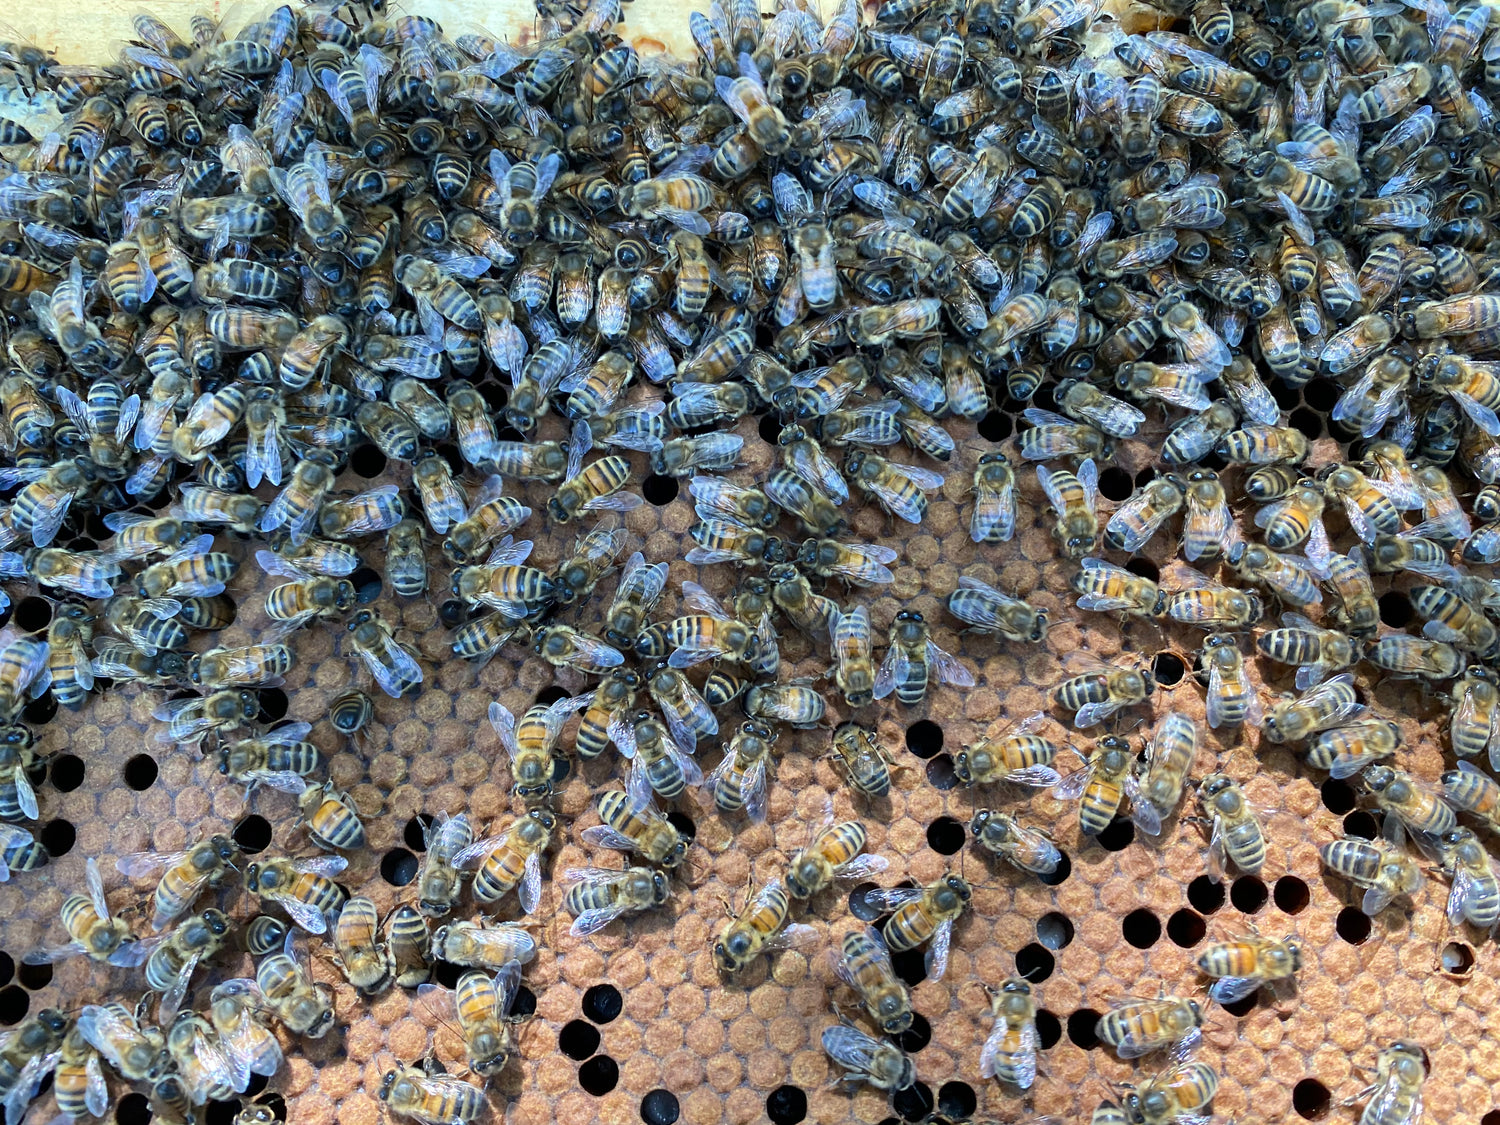 Varroa mite control in honeybees